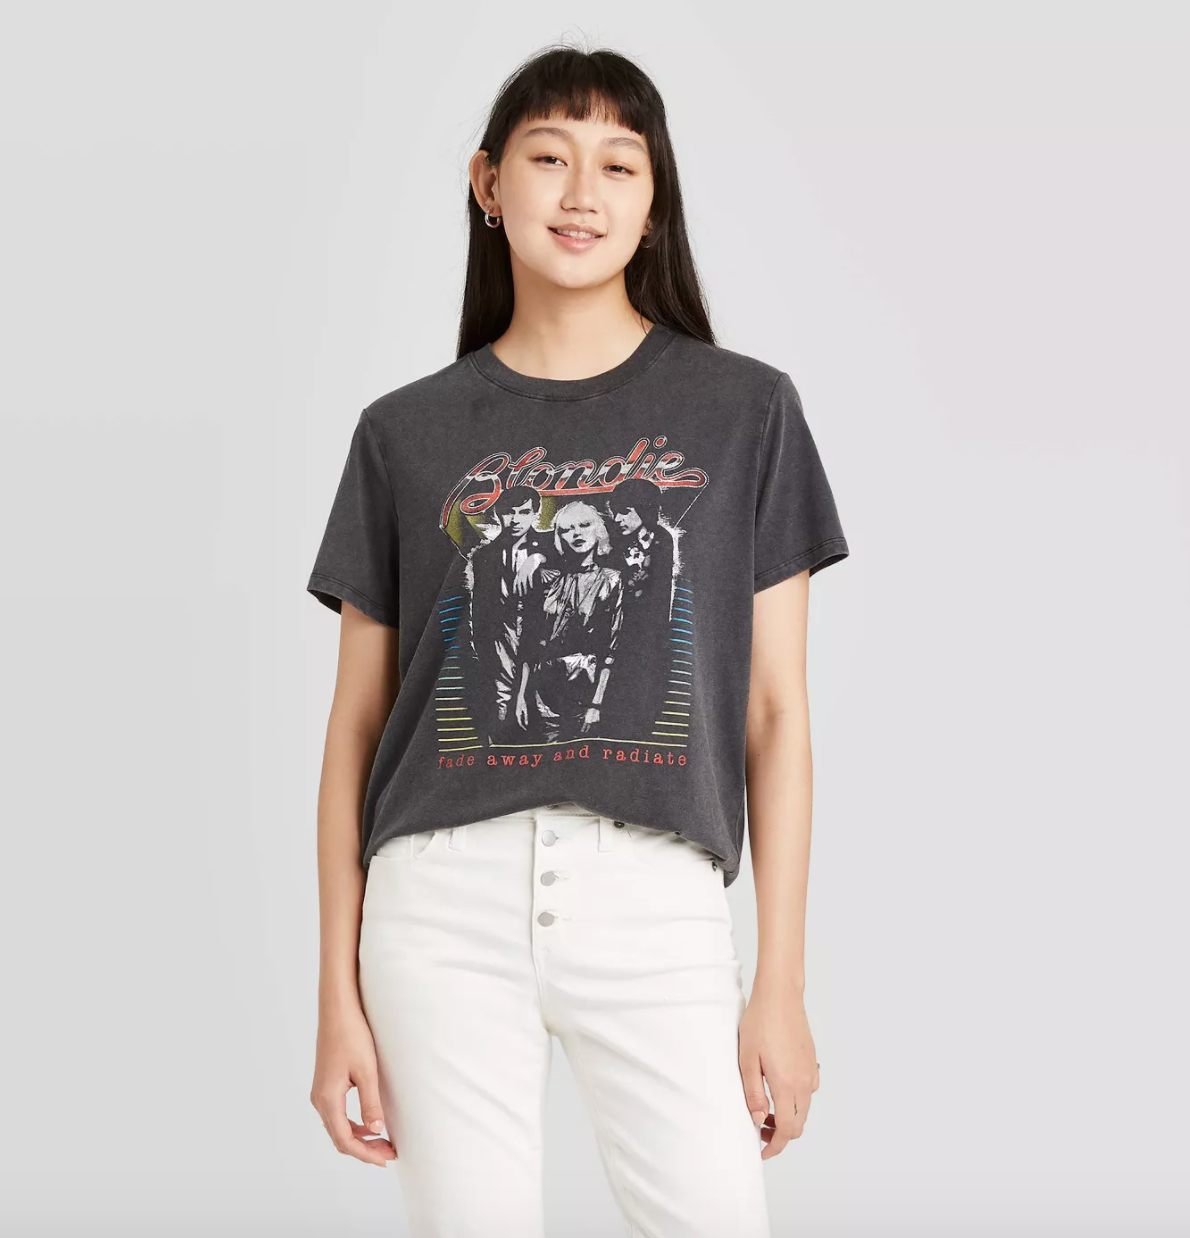 Target + Blondie Metallic Short Sleeve Graphic T-Shirt